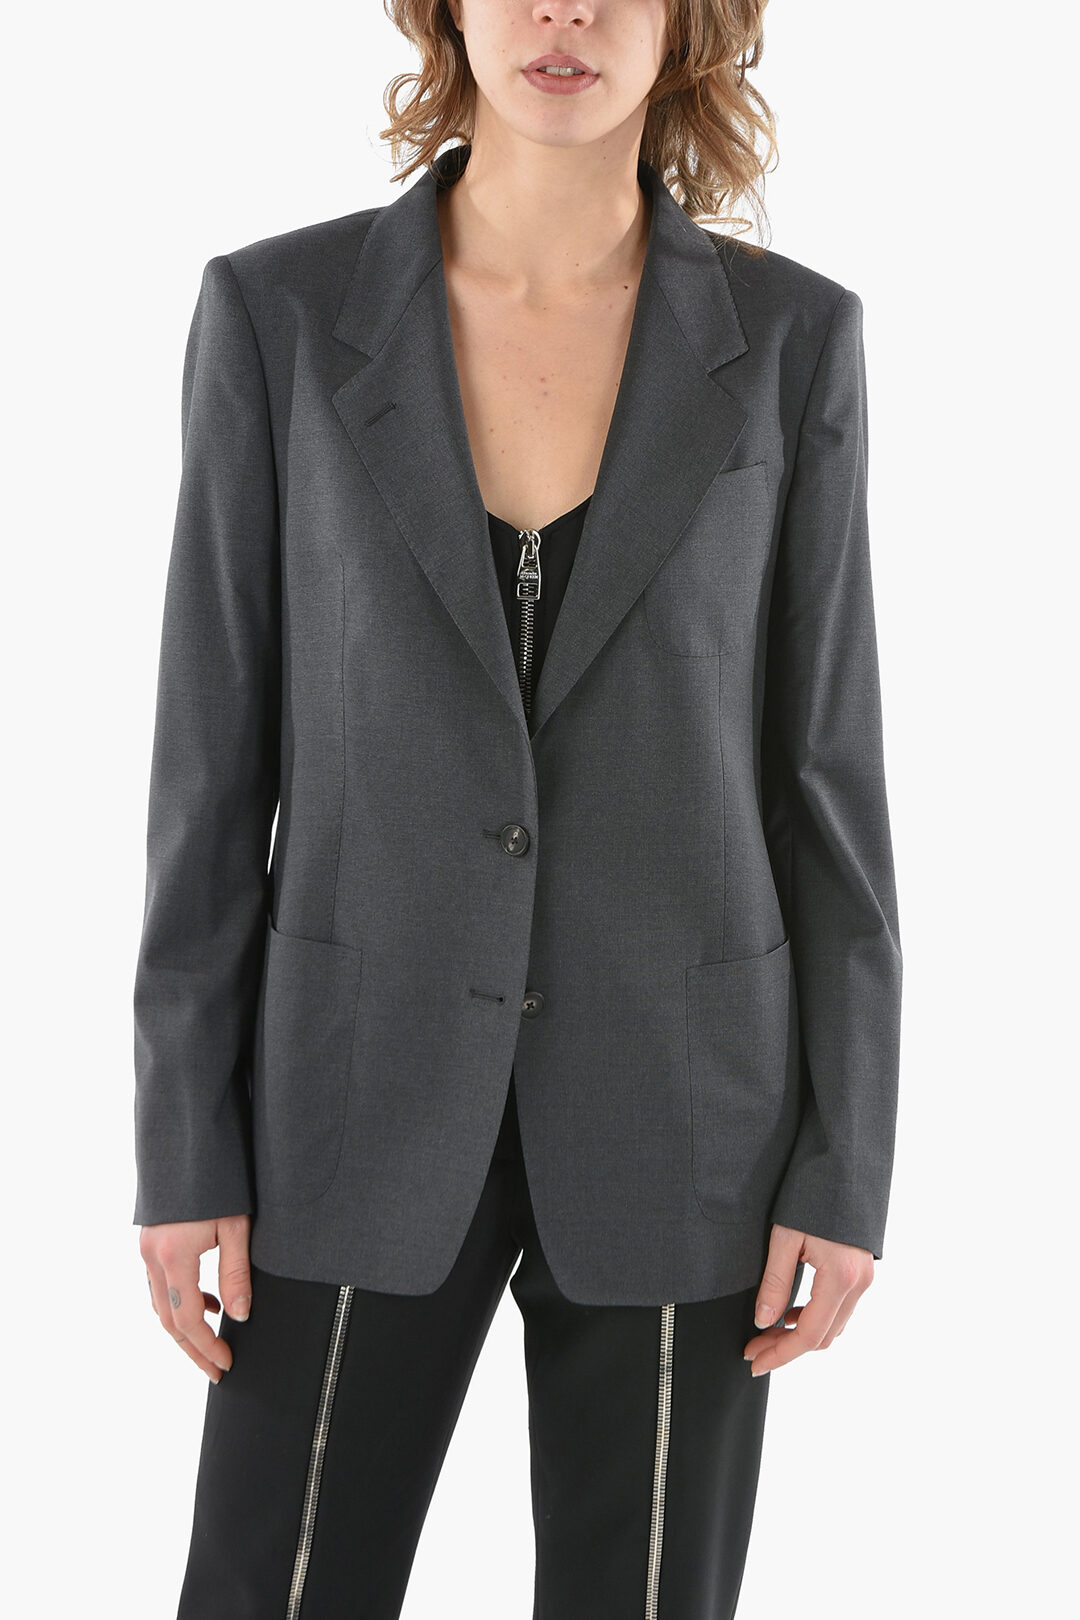 Tagliatore Tailored PARIGI Blazer with Back Vent women - Glamood Outlet